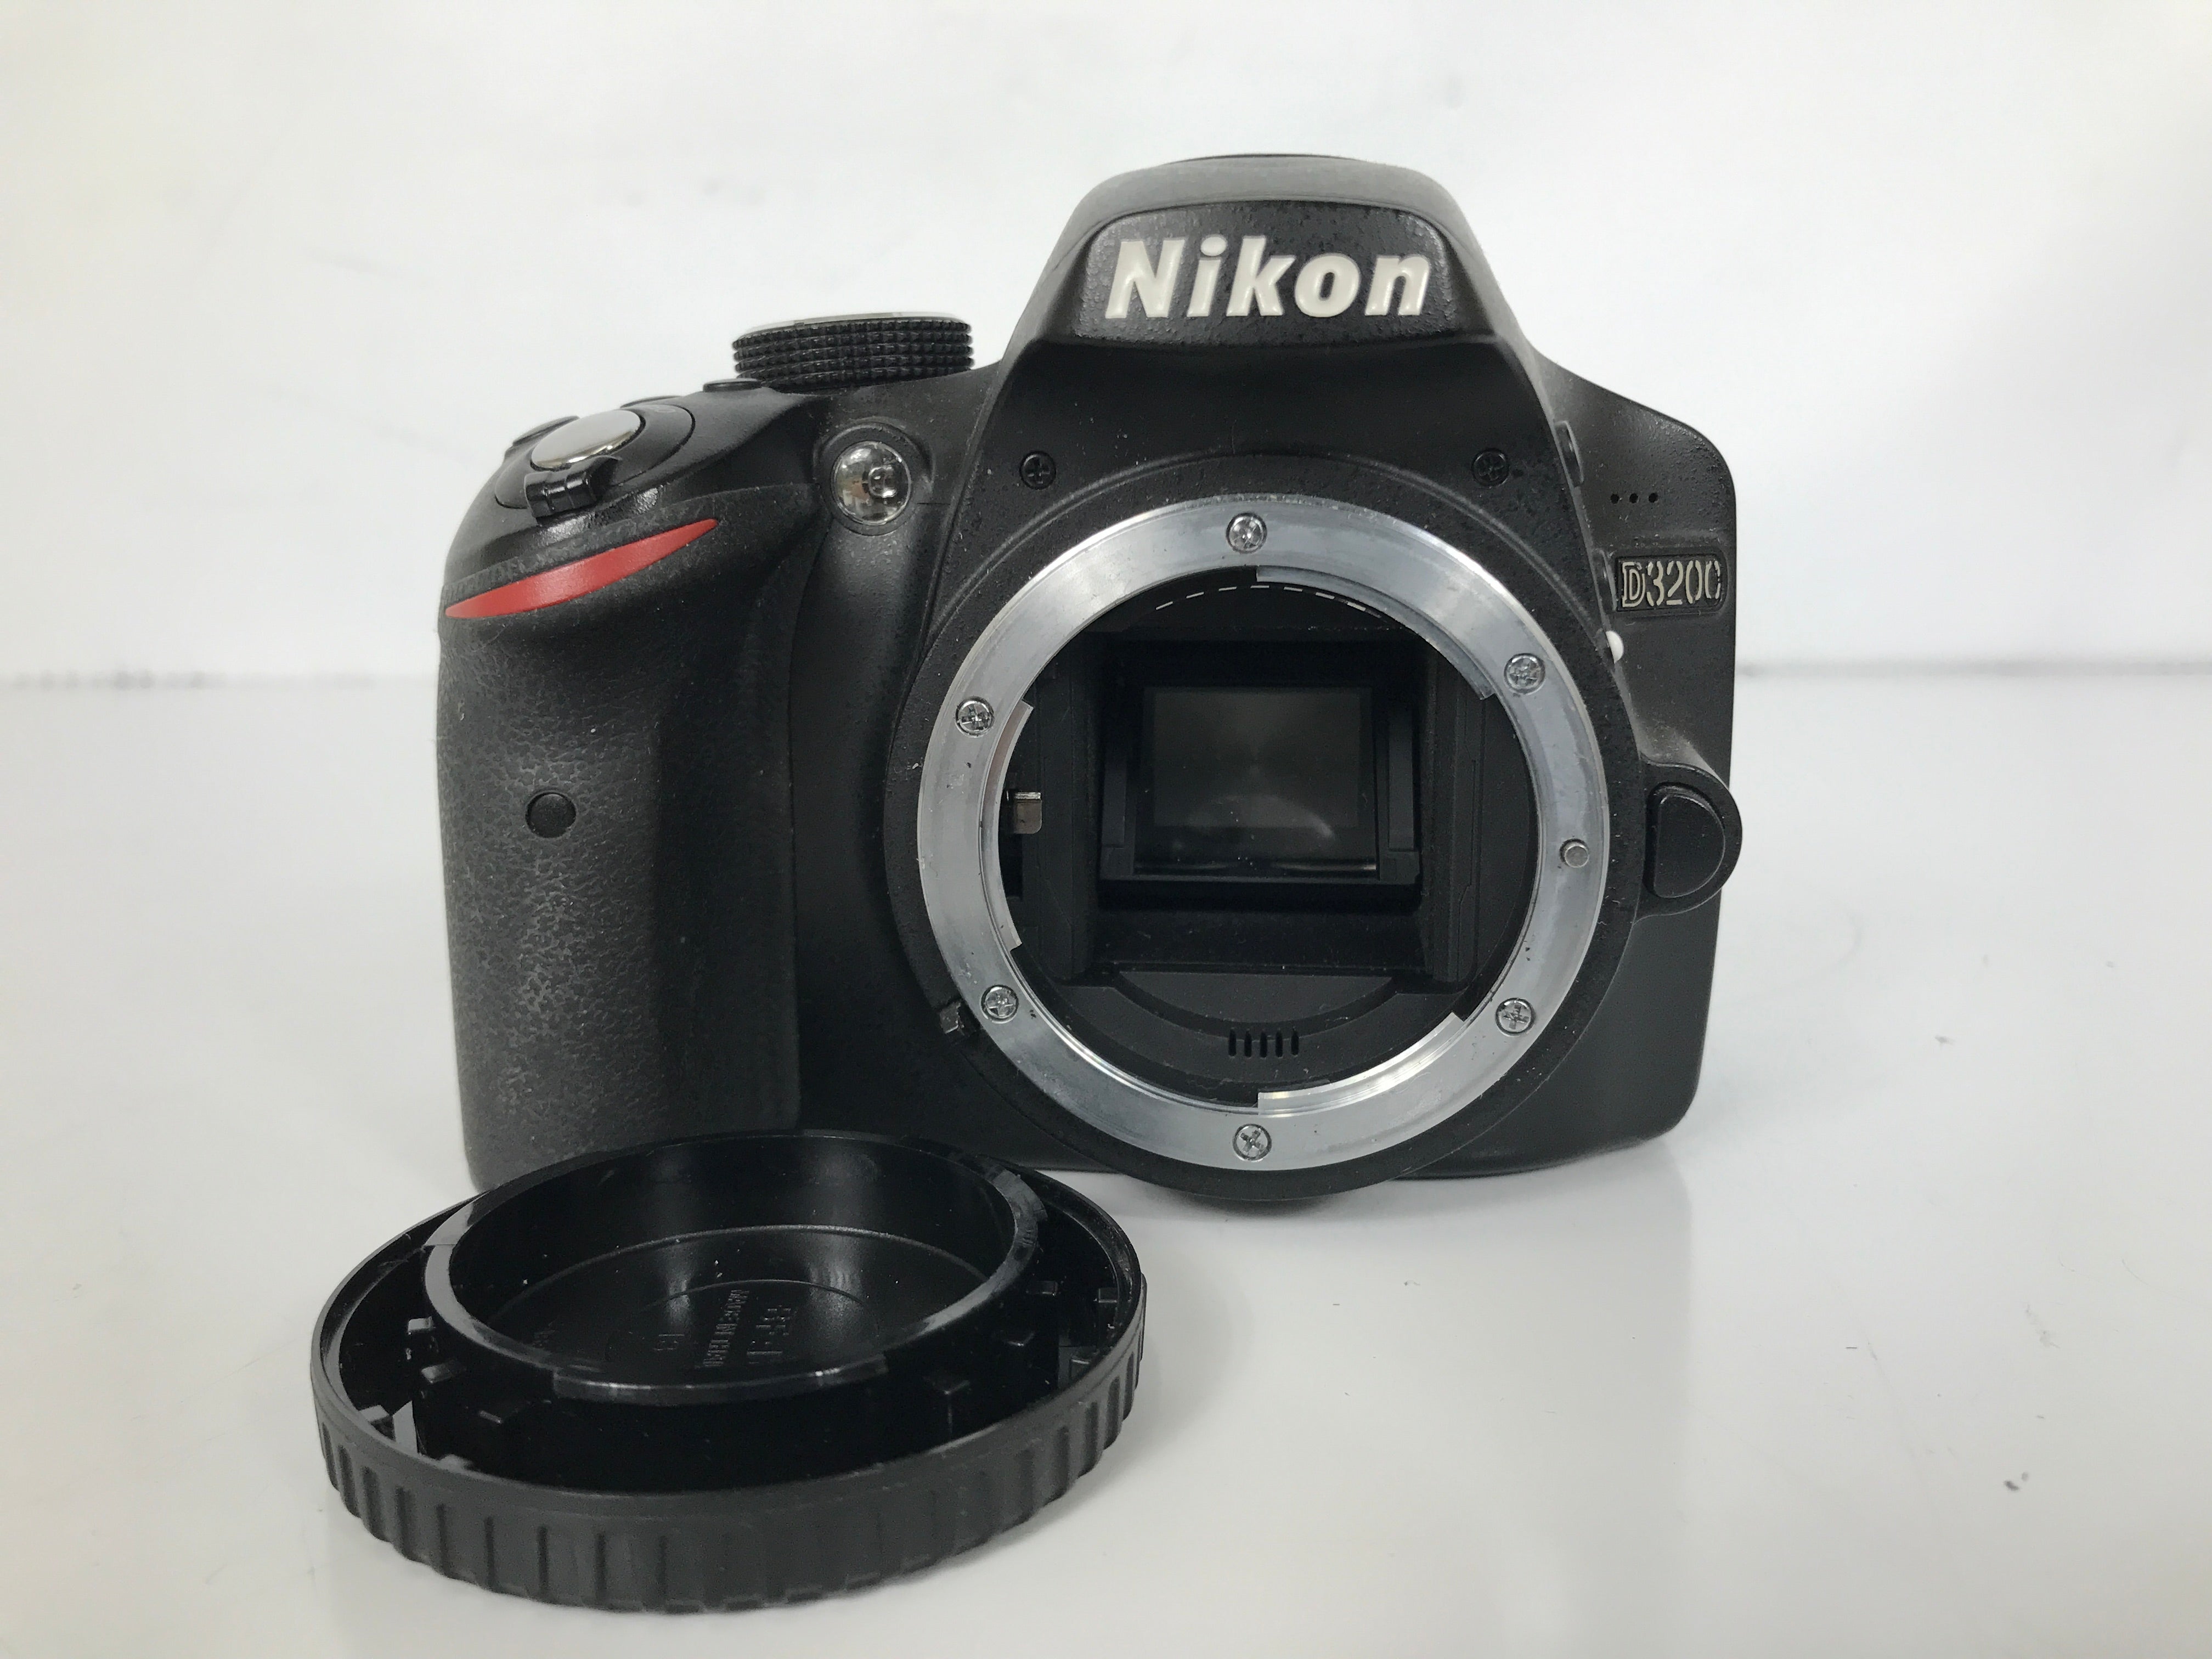 Nikon D3200 Digital SLR Camera - Body Only